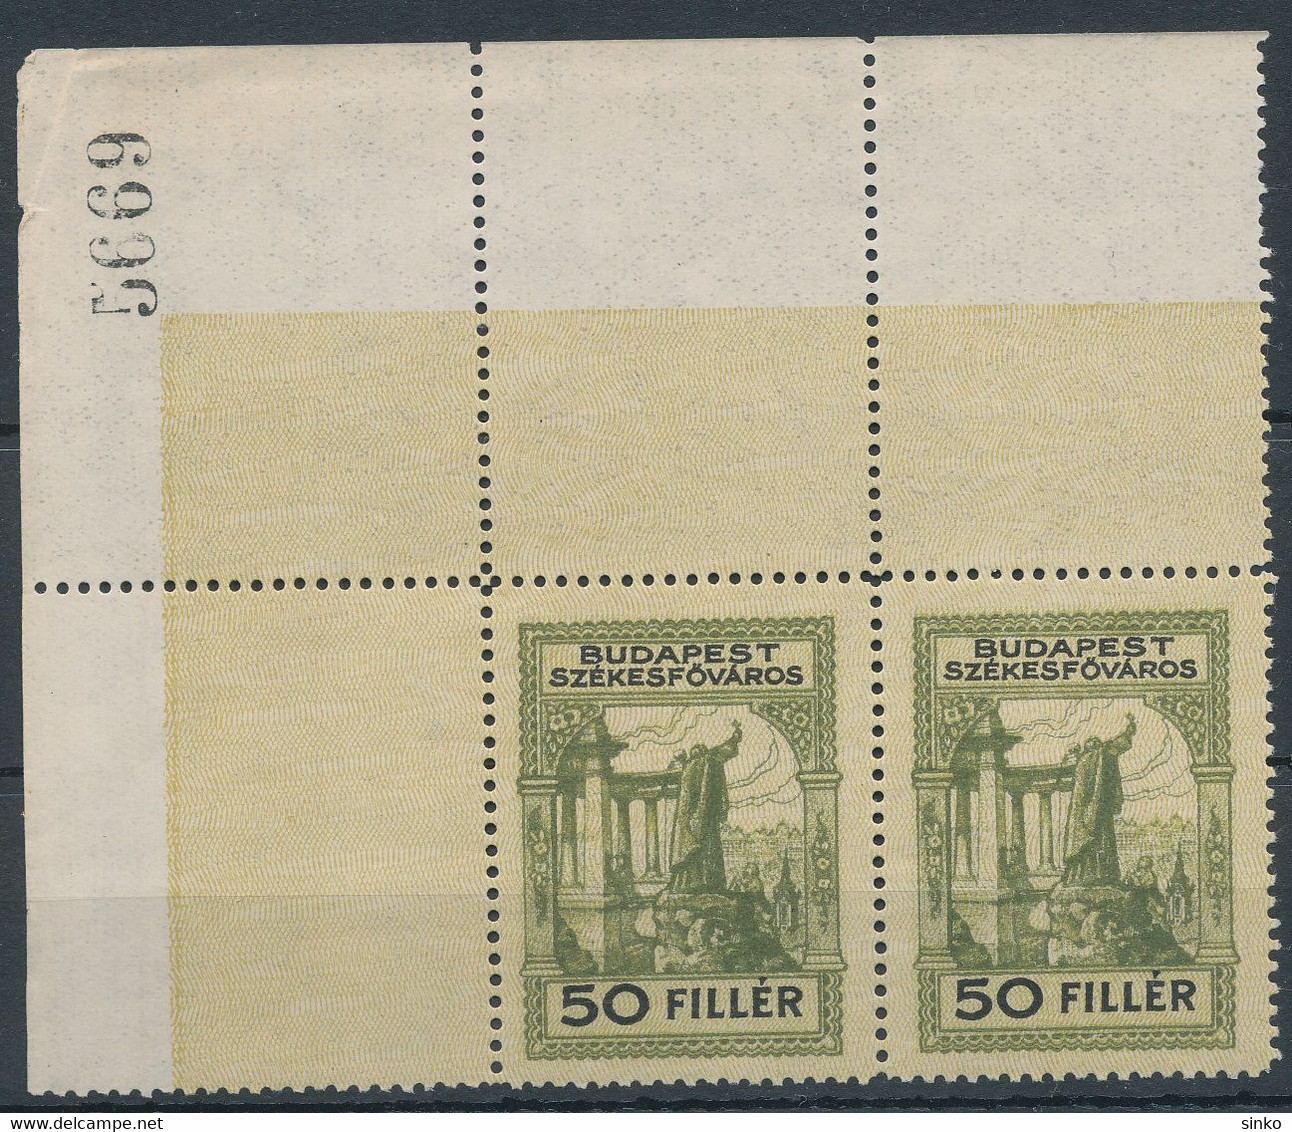 1927. Locally Issued Document Stamp - Hojas Conmemorativas